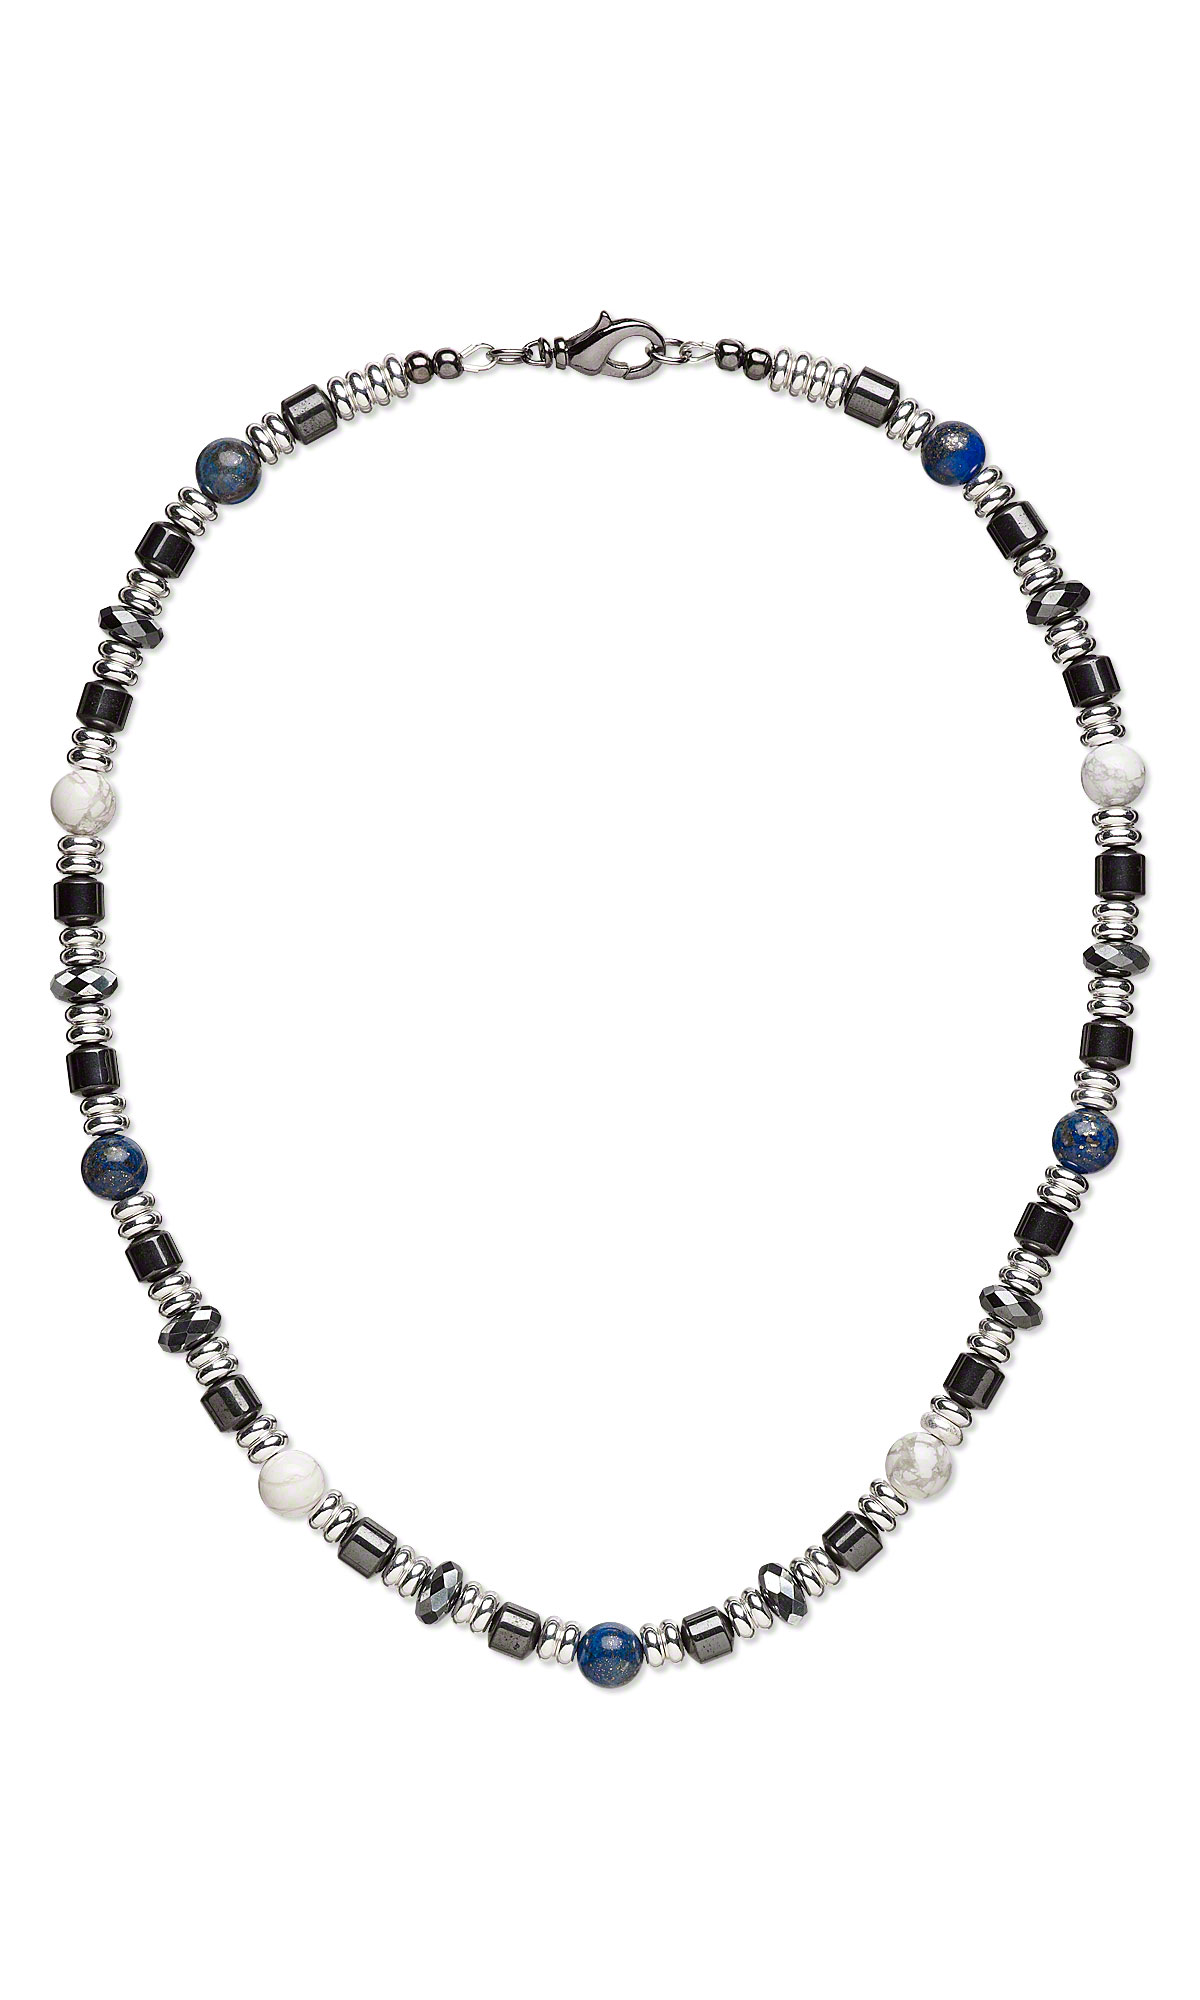 Jewelry Design - Single-Strand Necklace with Gemstone Beads, Hemalyke ...